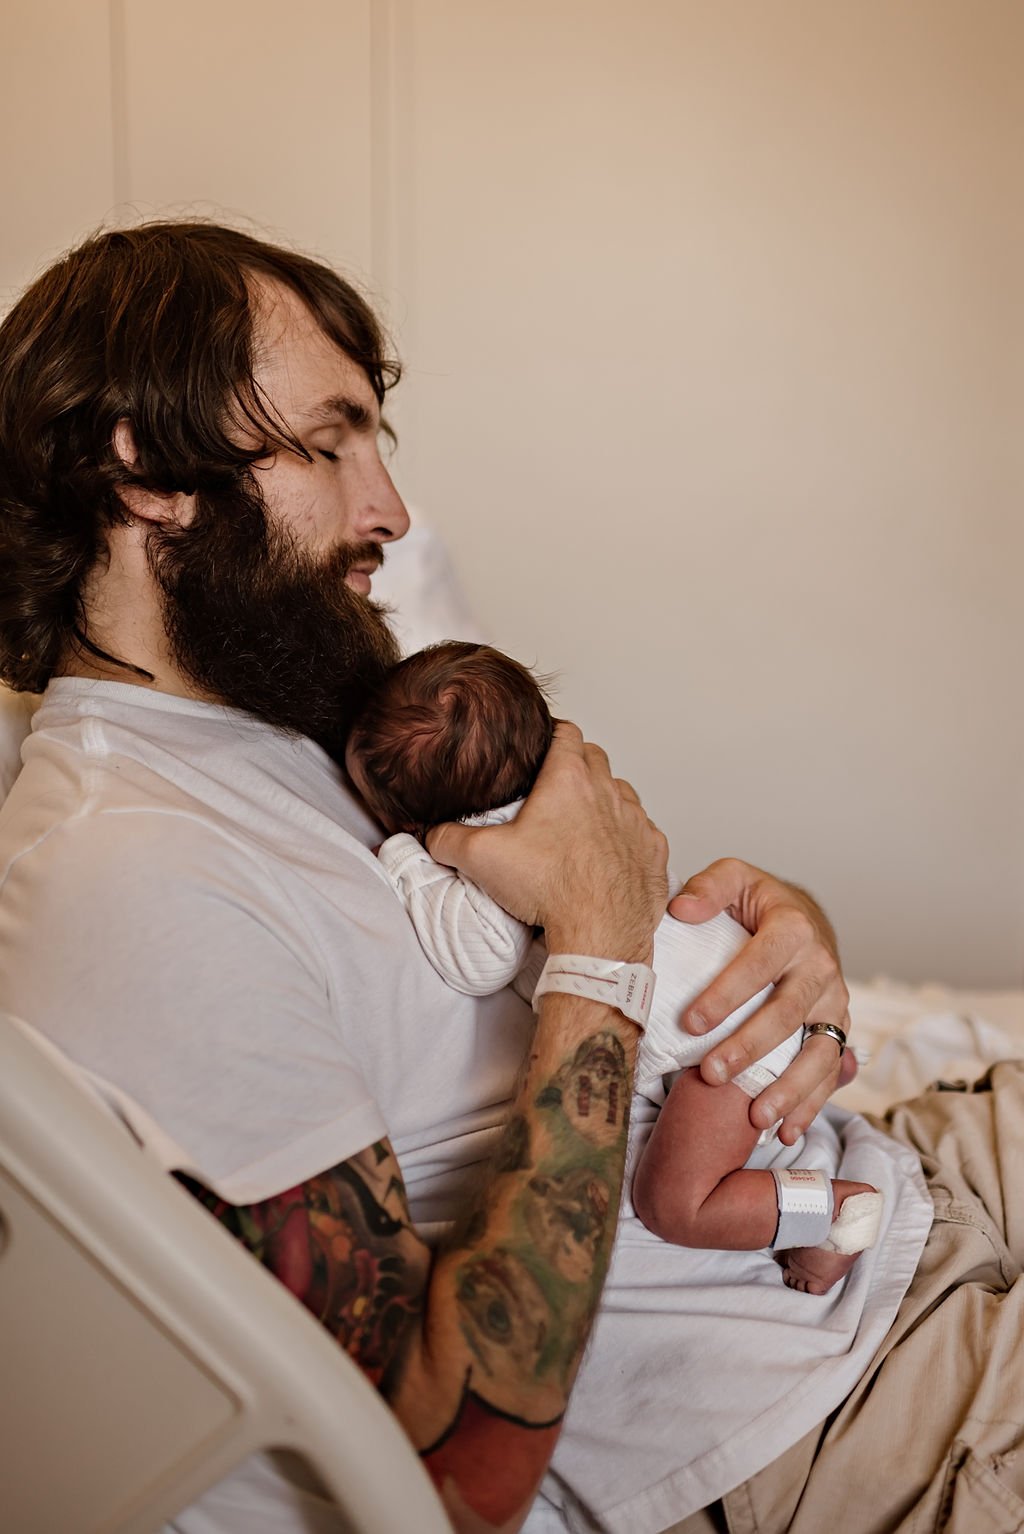 akron-general-cleveland-clinic-maternity-newborn-postpartum-fresh-48-hospital-photo-session12.jpg